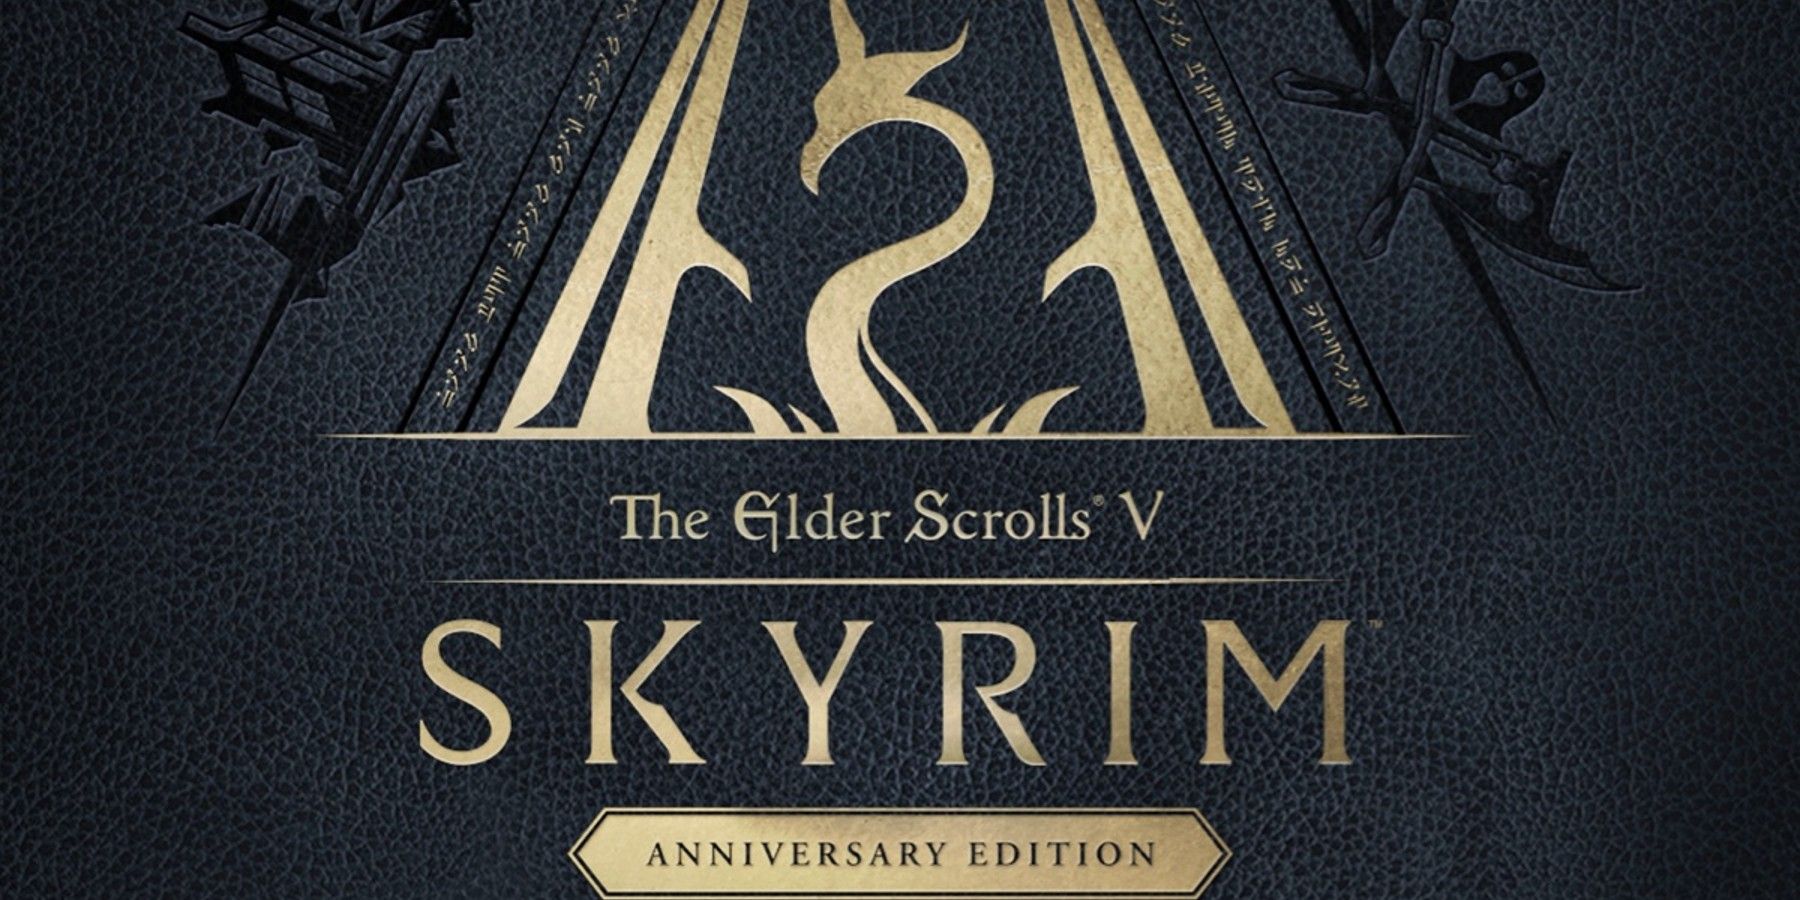 skyrim anniversary edition cover art